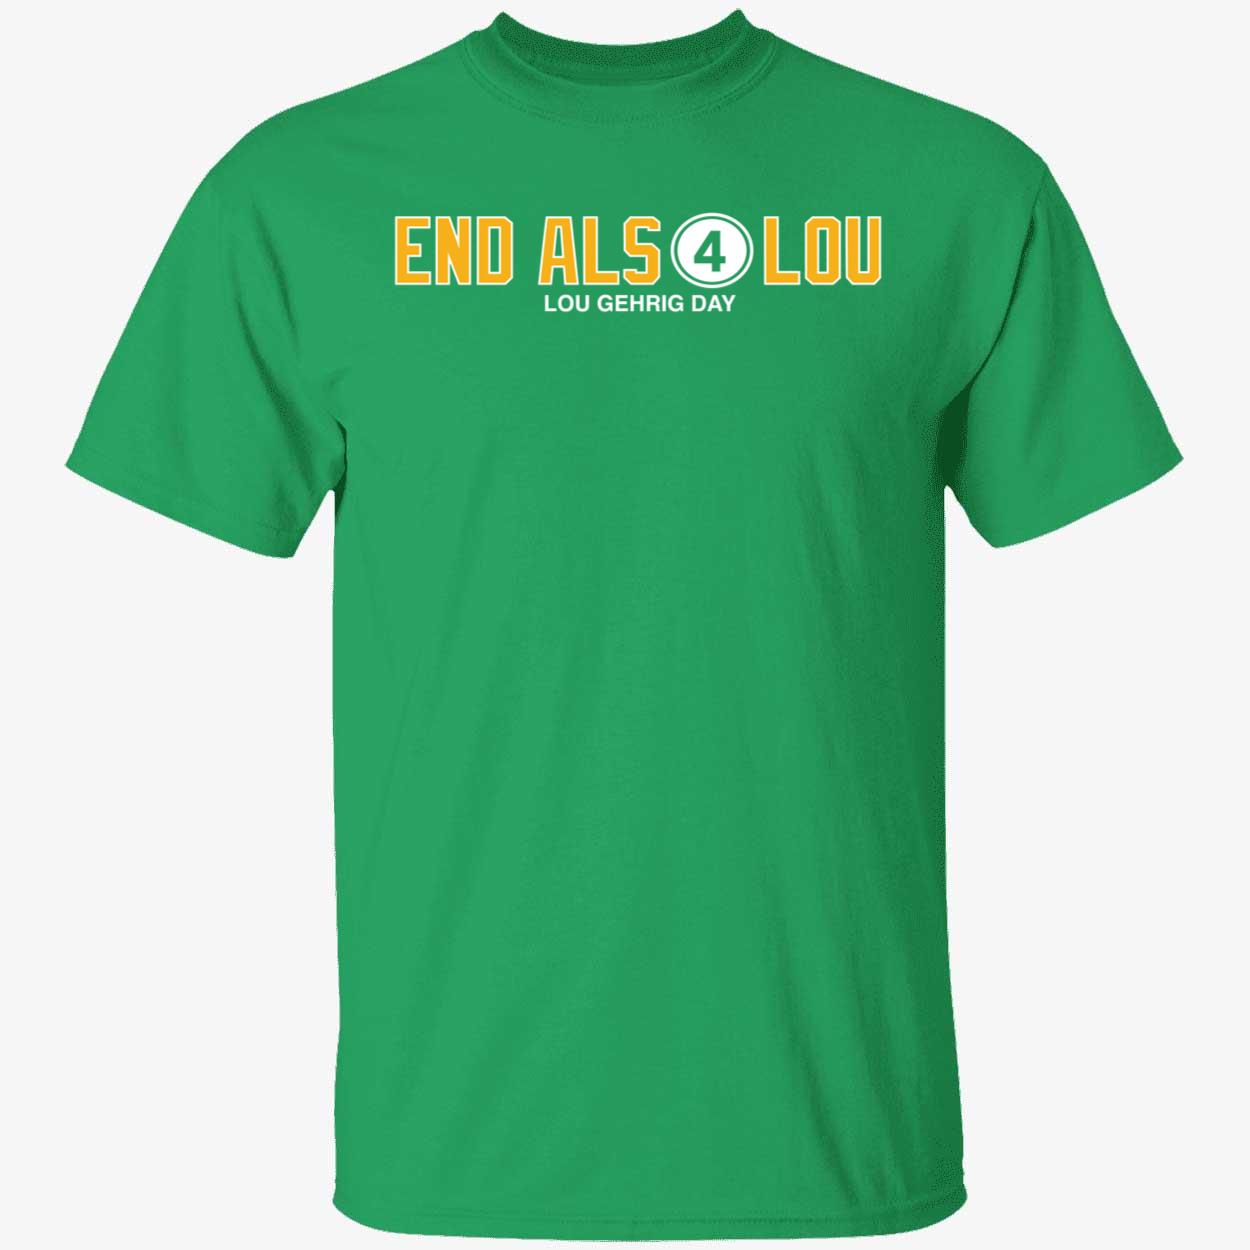 OneRockin Oakland Athletics End ALS 4 Lou Lou Gehrig Day Shirt